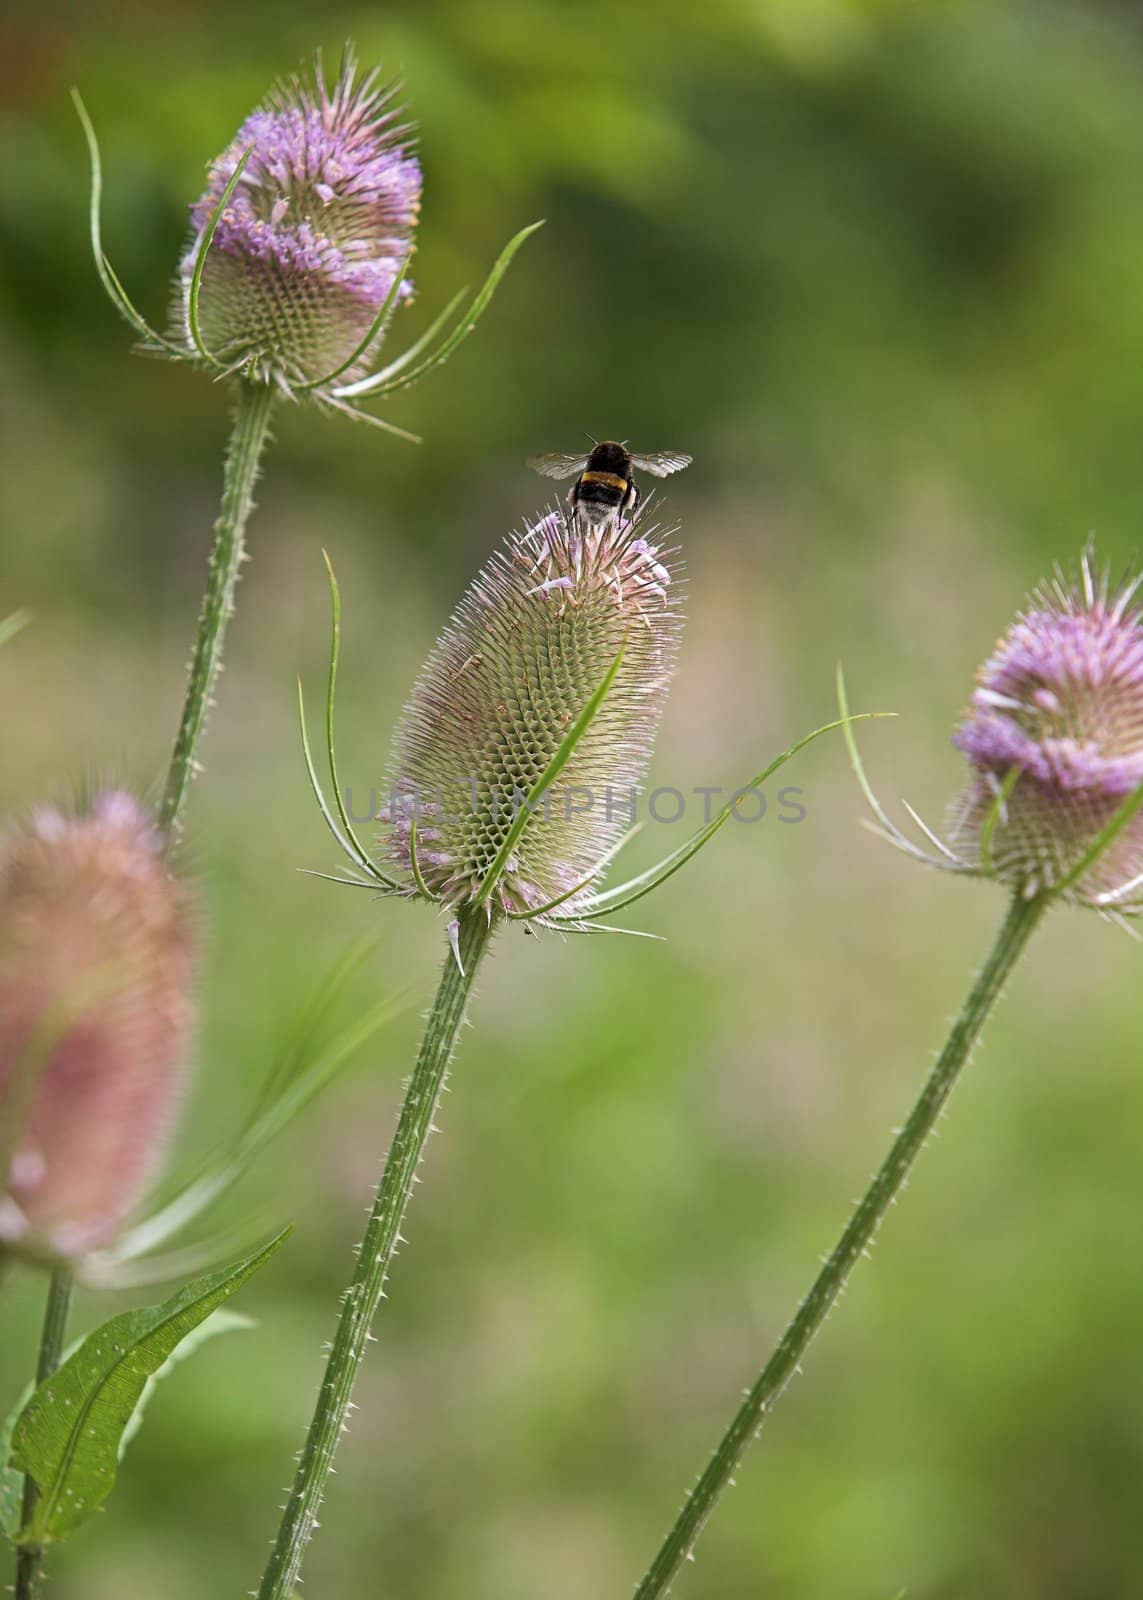 Teasel Seedheads and a Bumblebee by grandaded